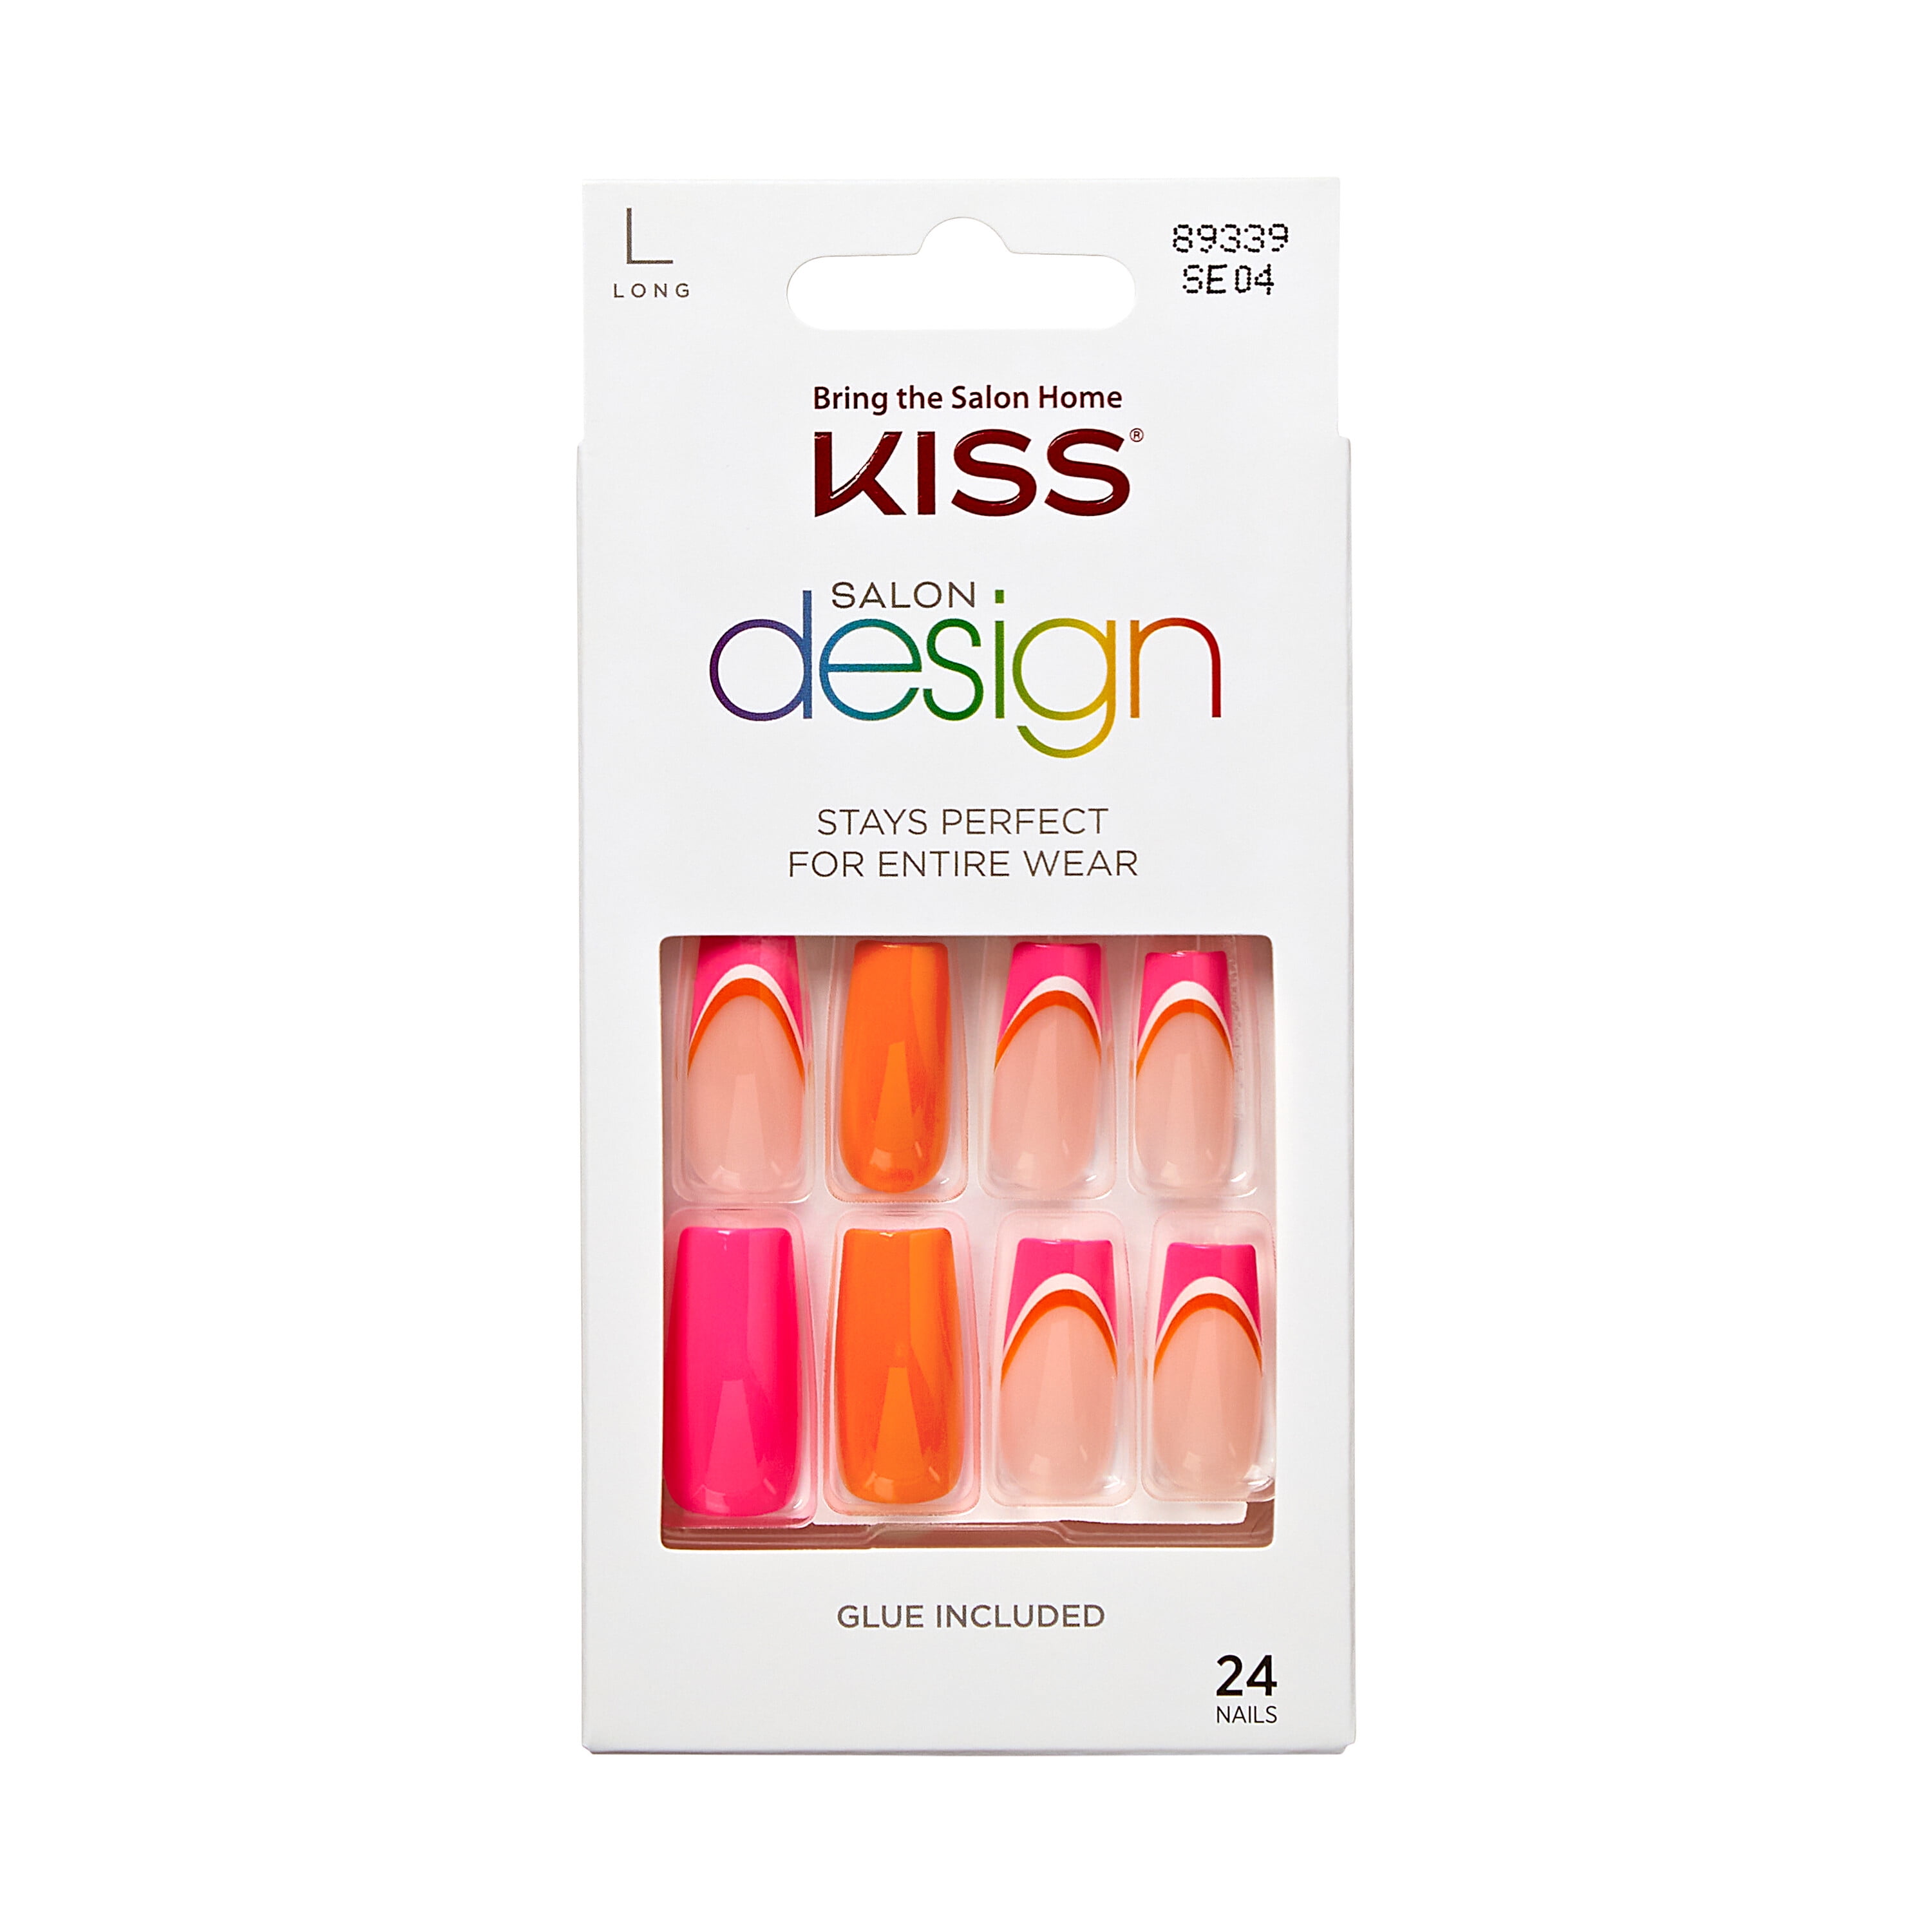 KISS Salon Design Medium Coffin Glue-On Nails, Glossy Dark Pink, 'We Go ...